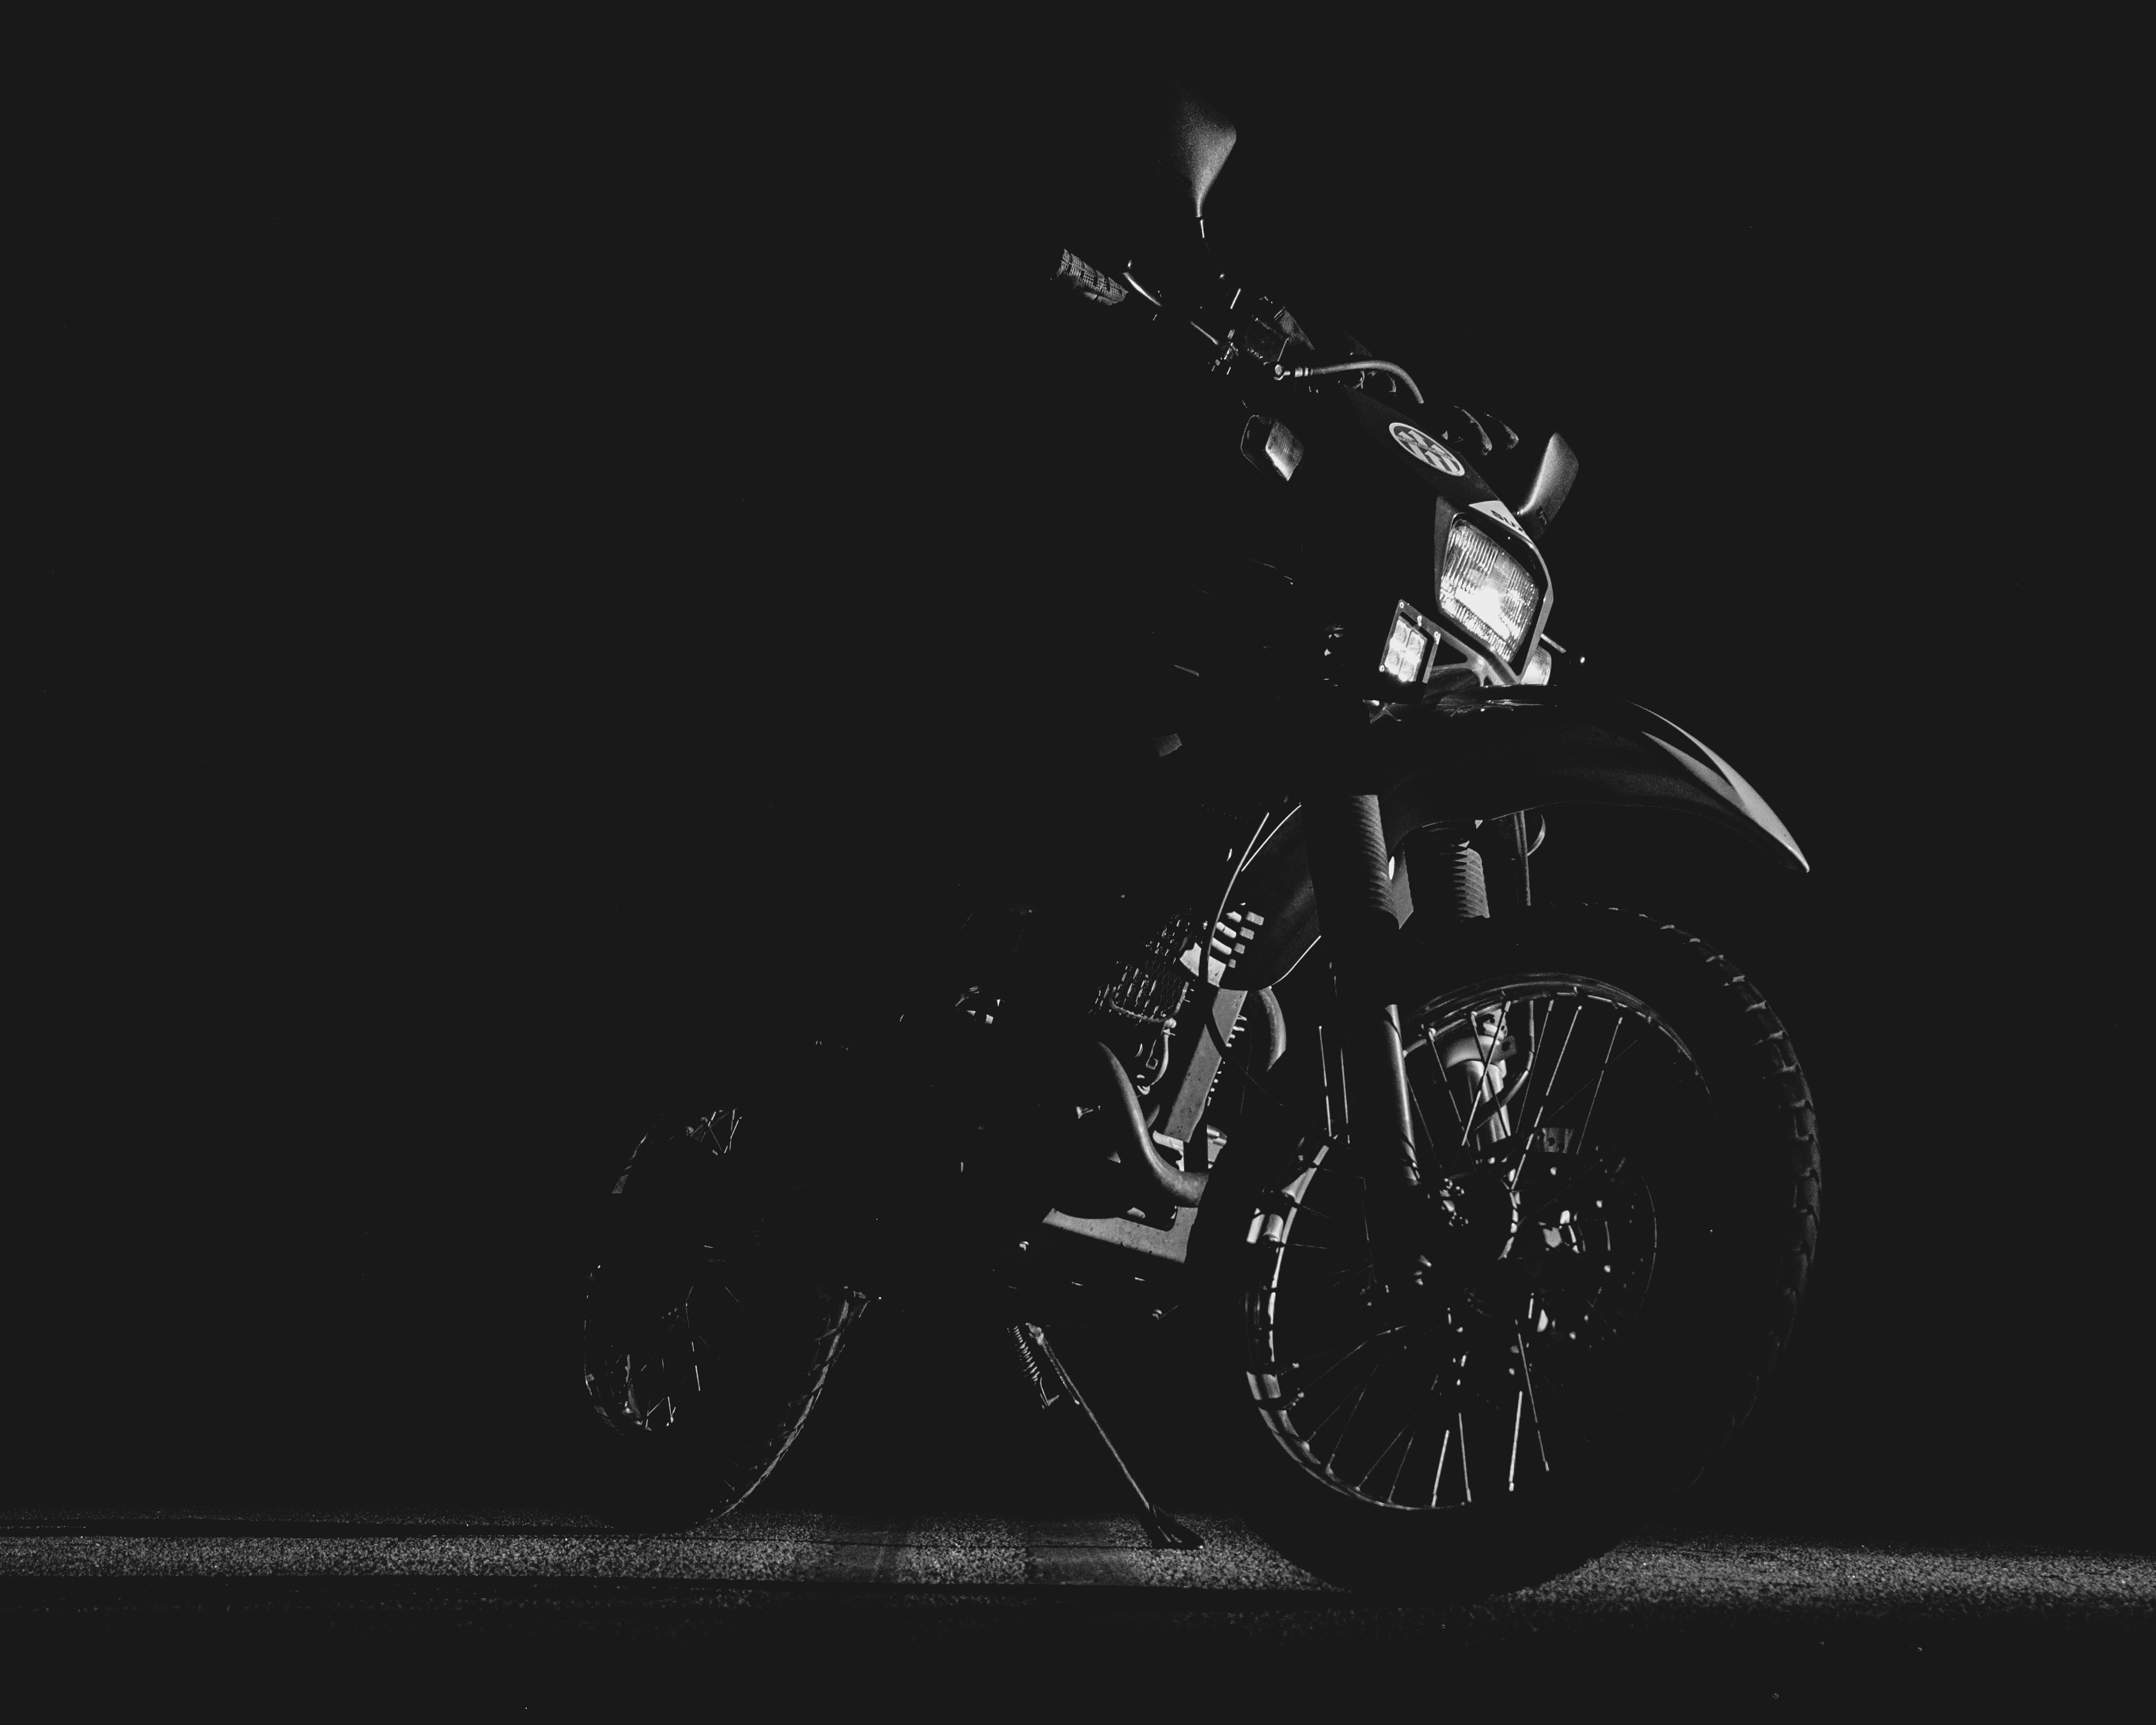 bw, steering wheel, motorcycle, motorcycles, darkness, chb, wheel, rudder Phone Background